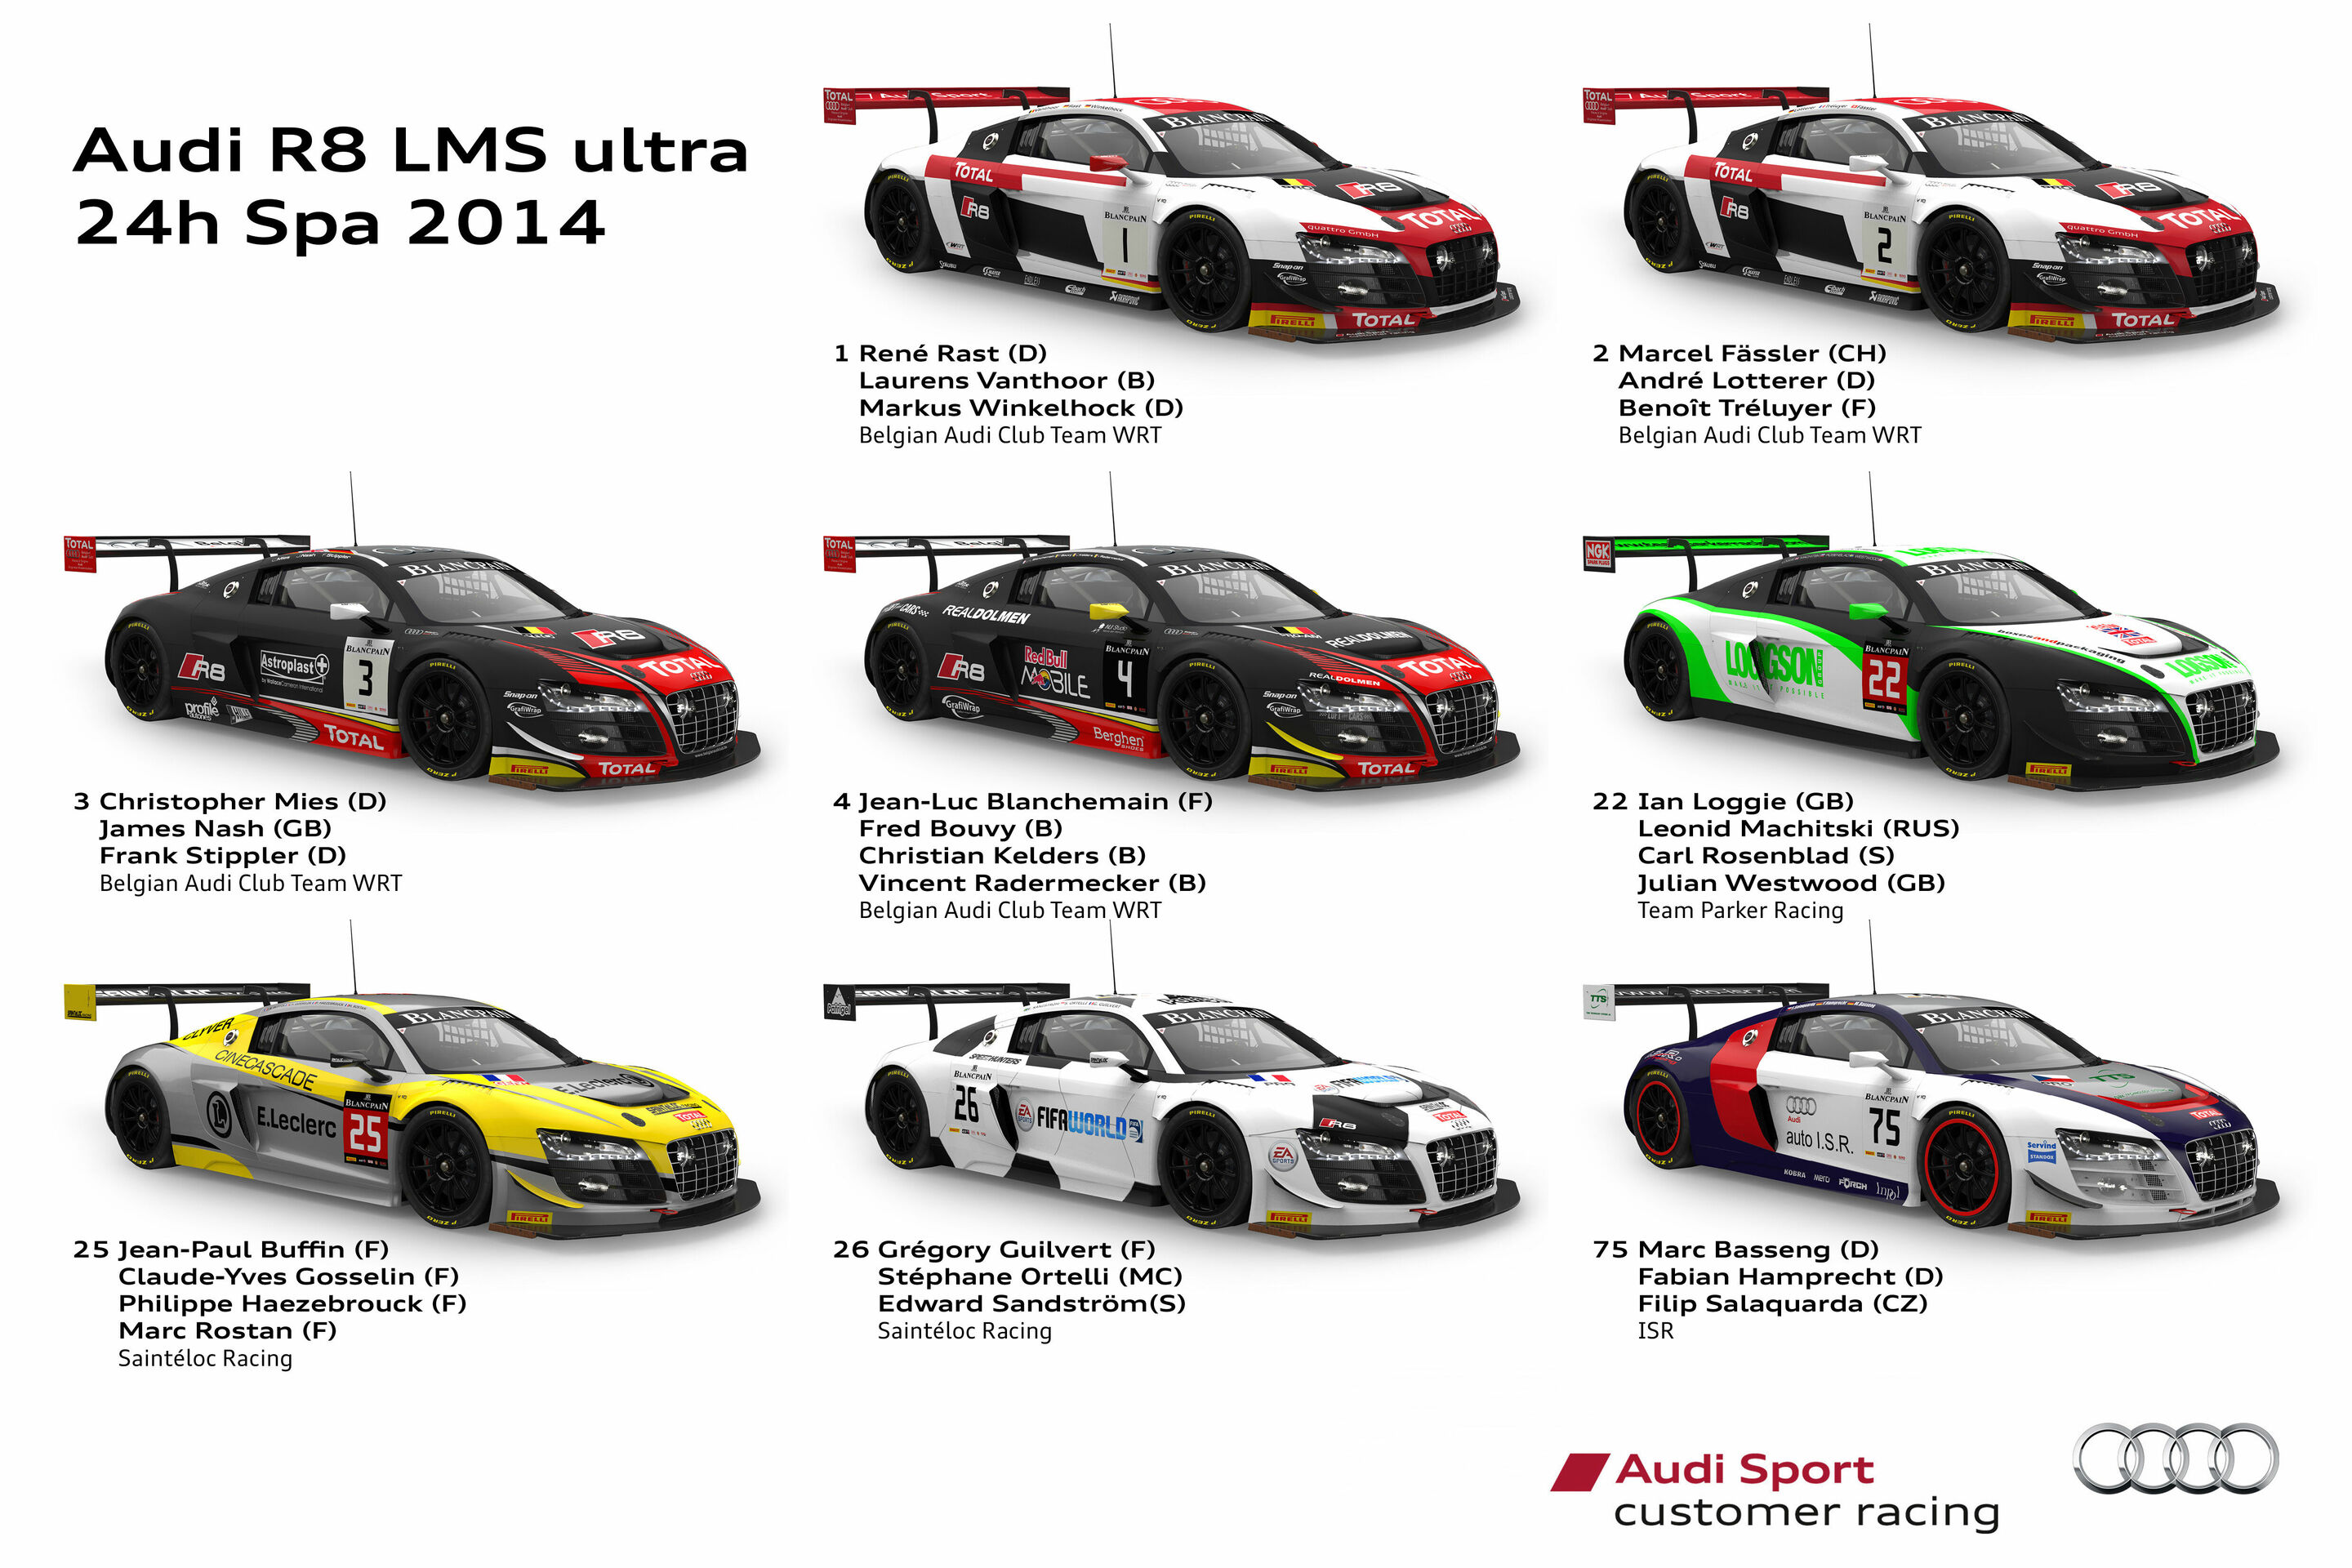 Audi teams aim to mount winners’ podium again